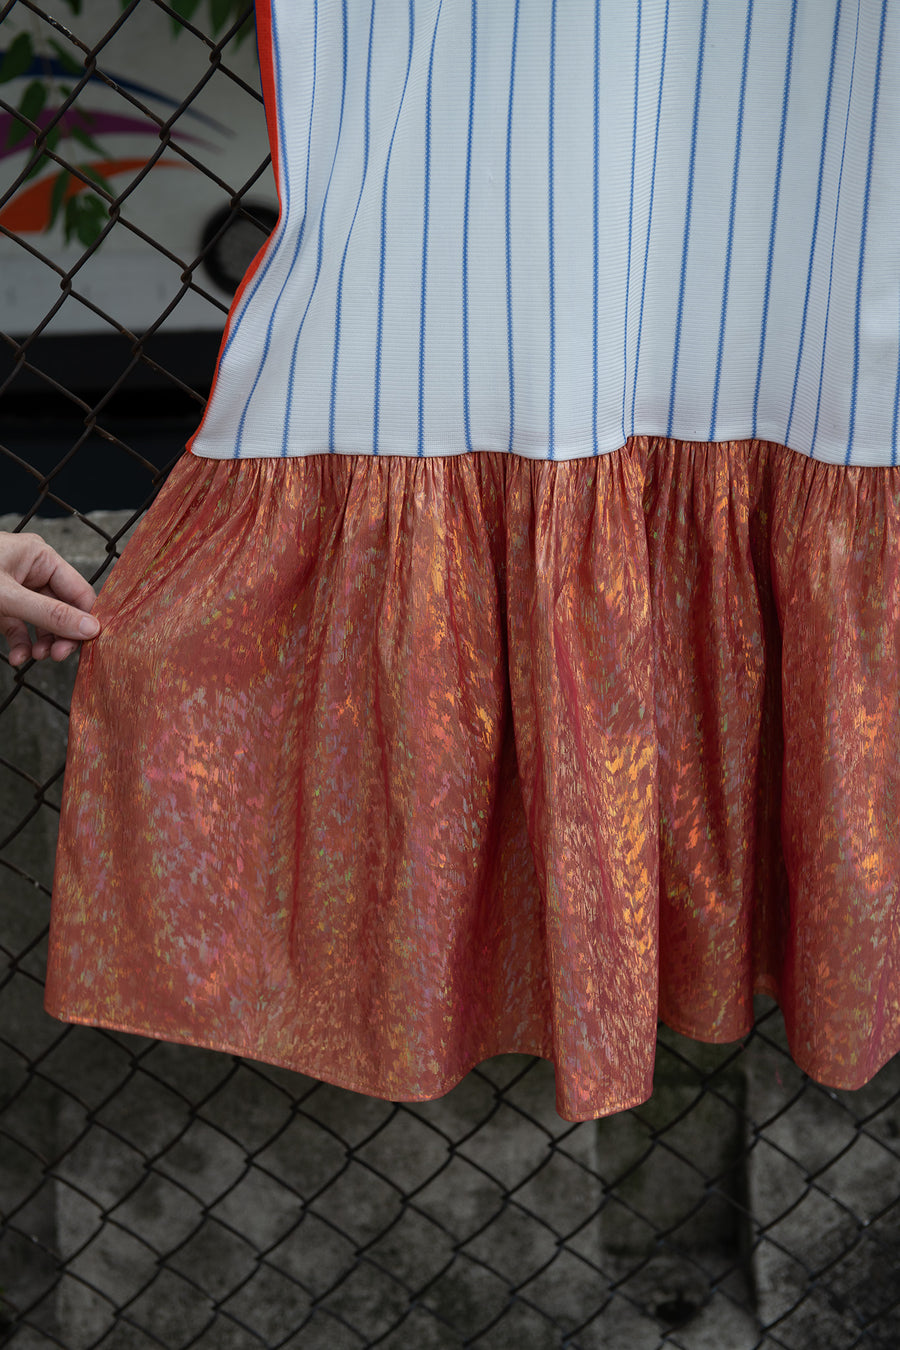 BATSHEVA - One-of-a-Kind Vintage Mets Jersey Lamé Dress